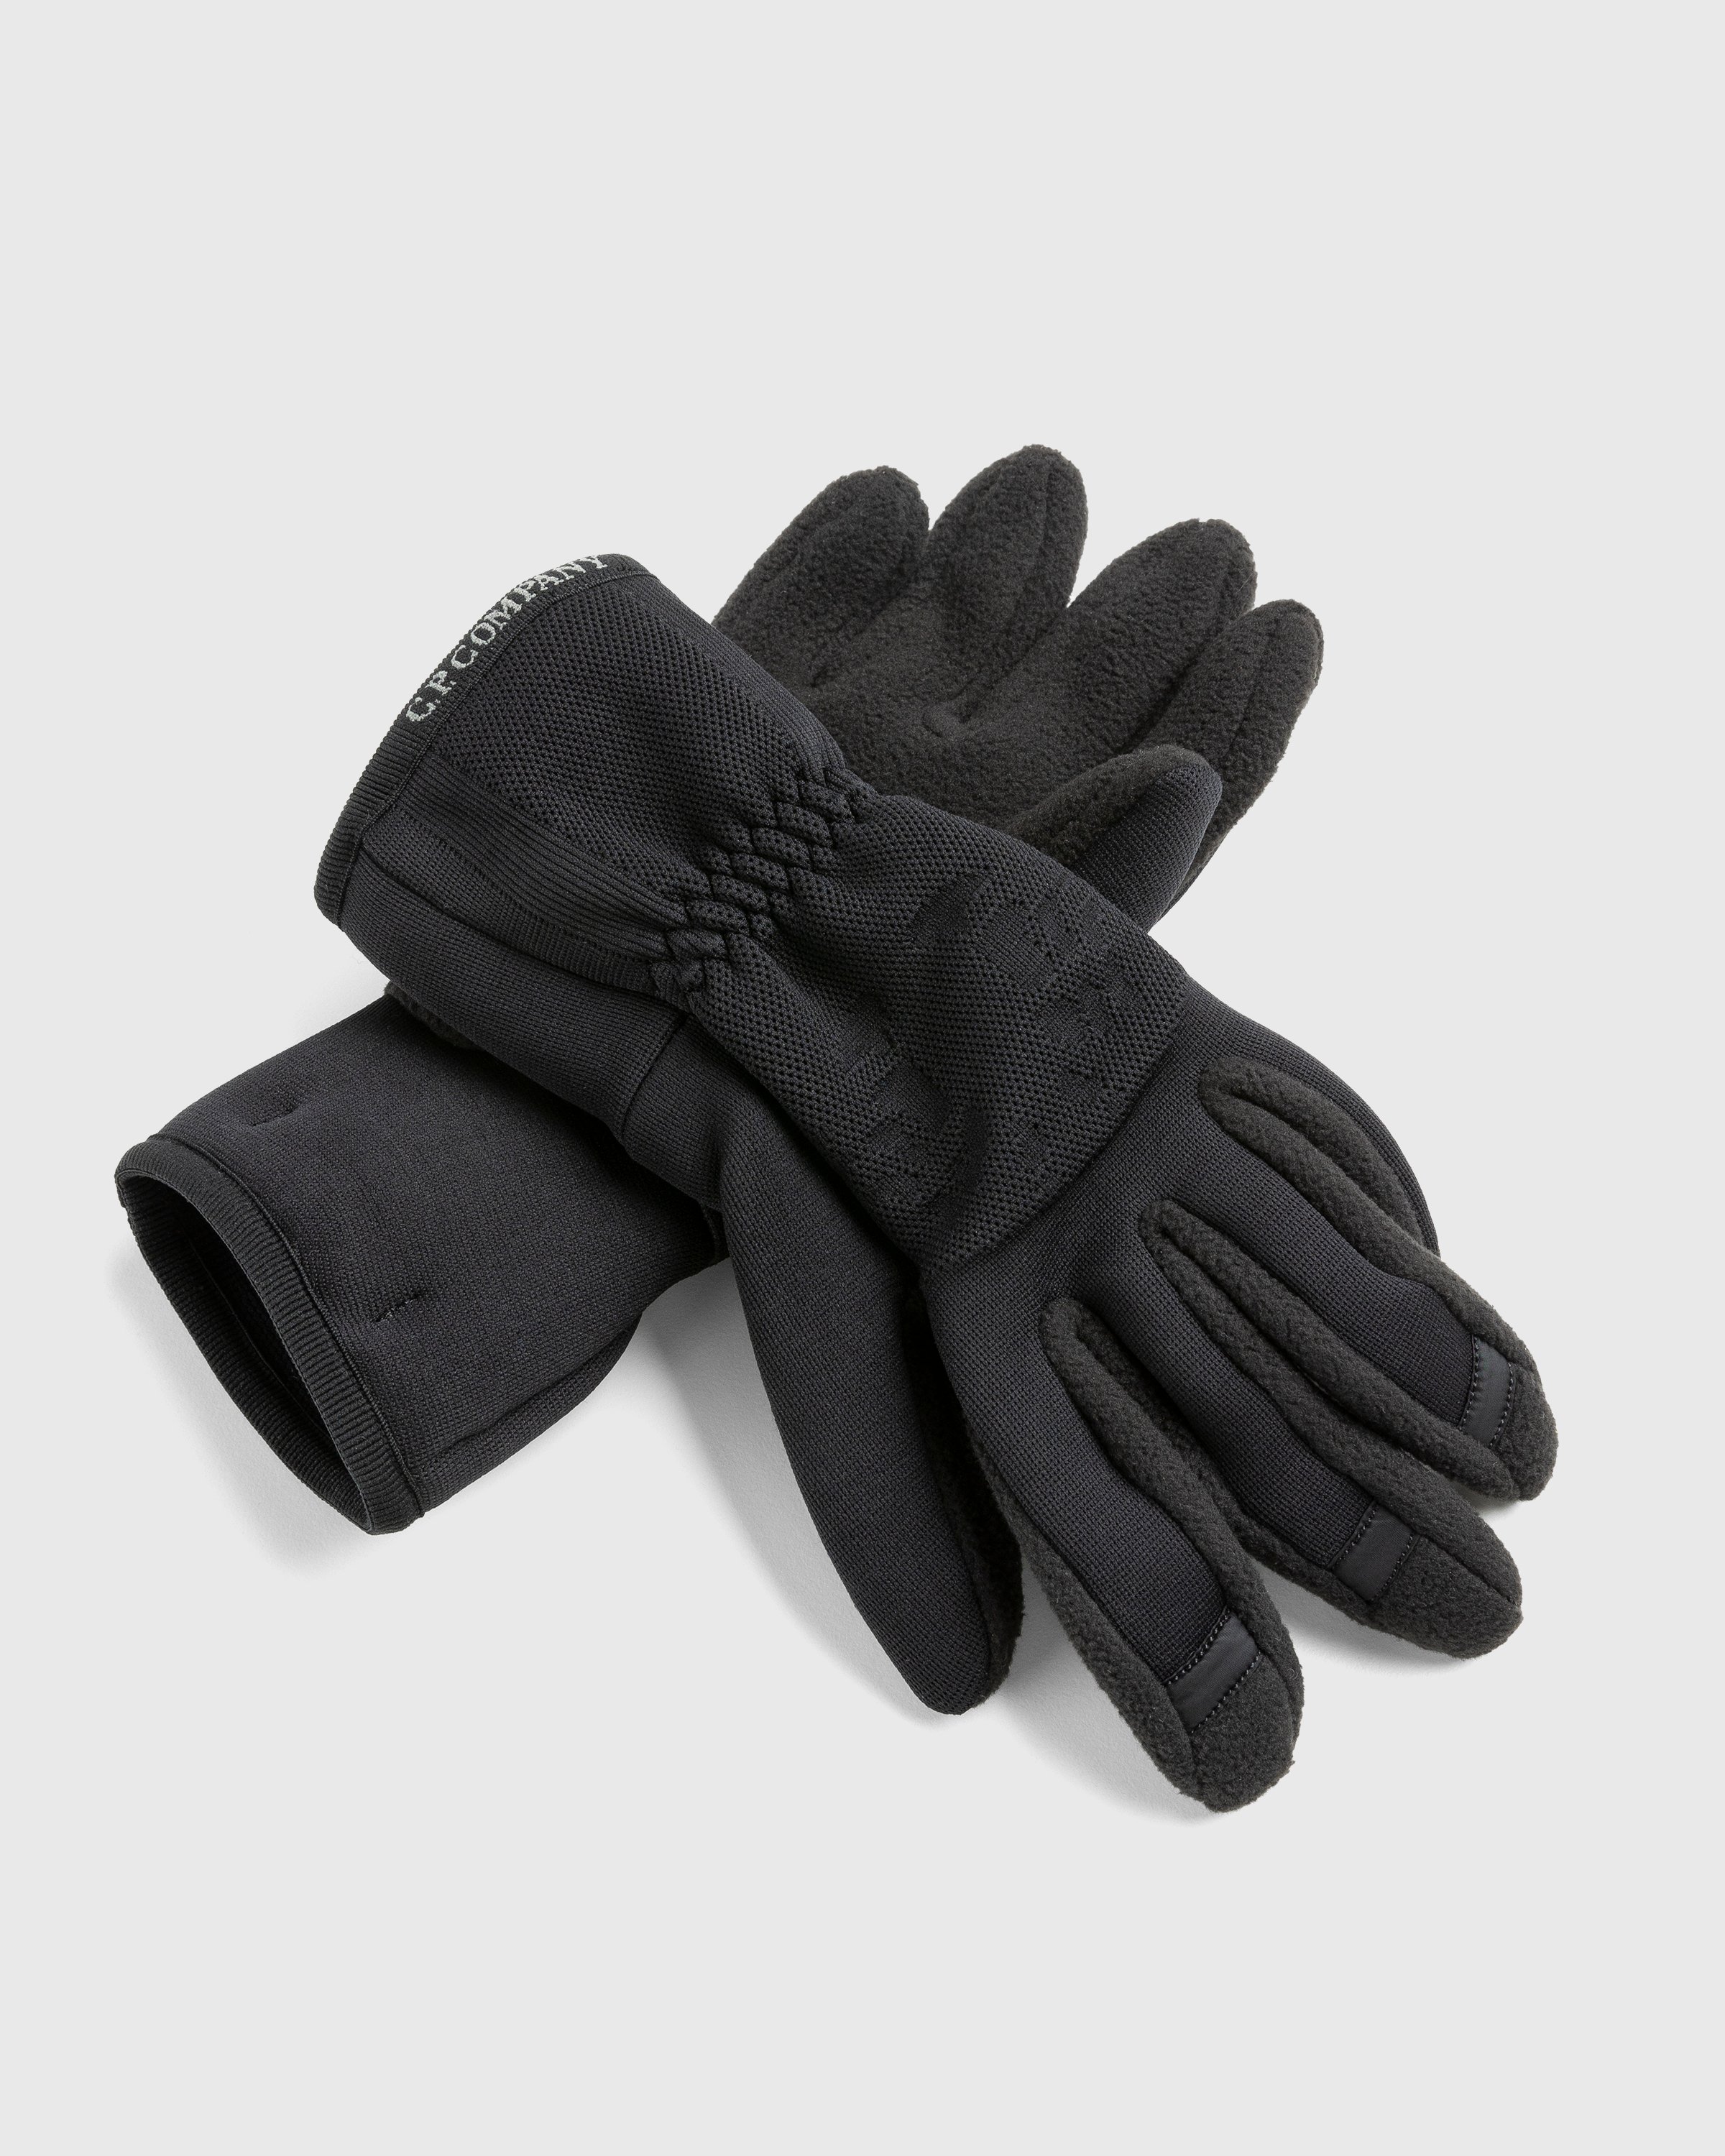 C.P. Company - Seamless Gloves Black - Accessories - Black - Image 3